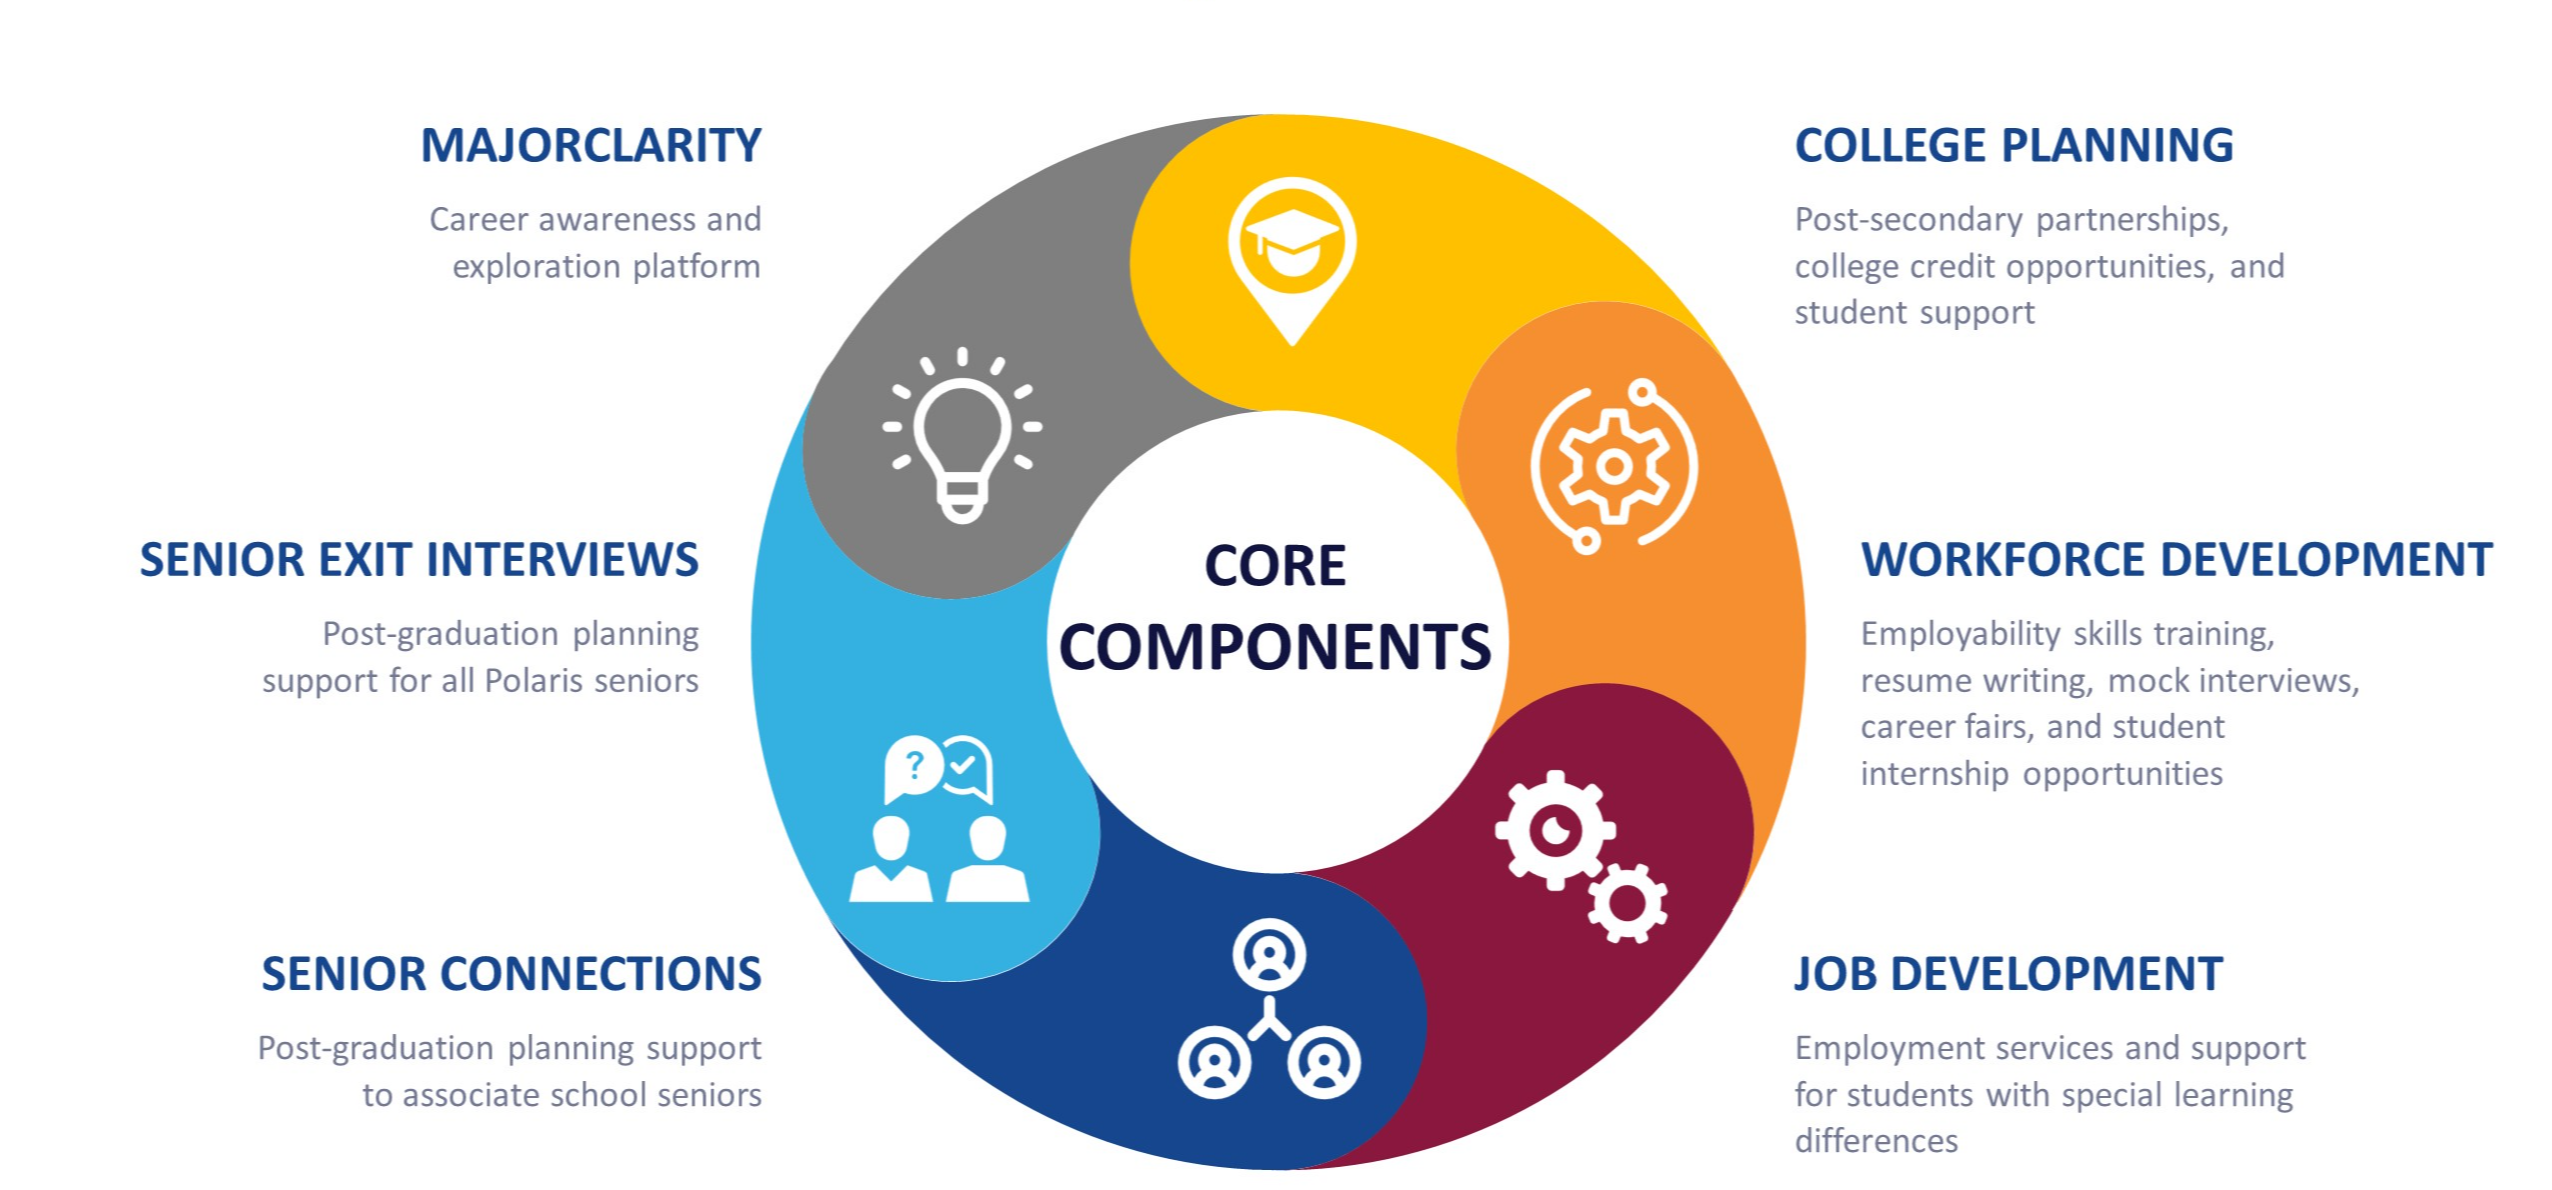 Core Components of Career Development Framework - Major Clarity, Senior Exit Interviews, Senior Connections, College Planning, Workforce Development, Job Development